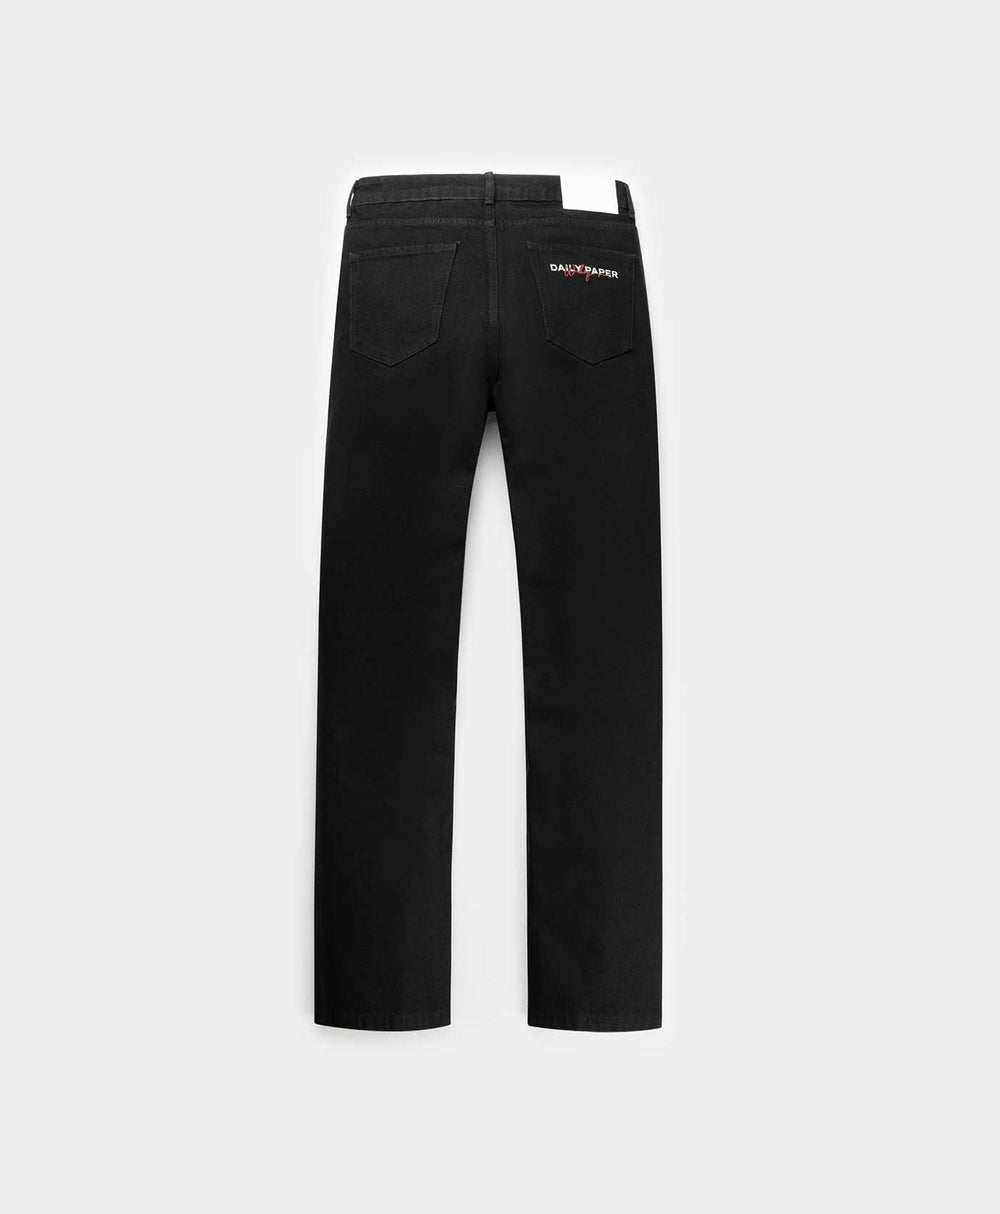 DP - Black Wekafela Jeans - Packshot - Rear